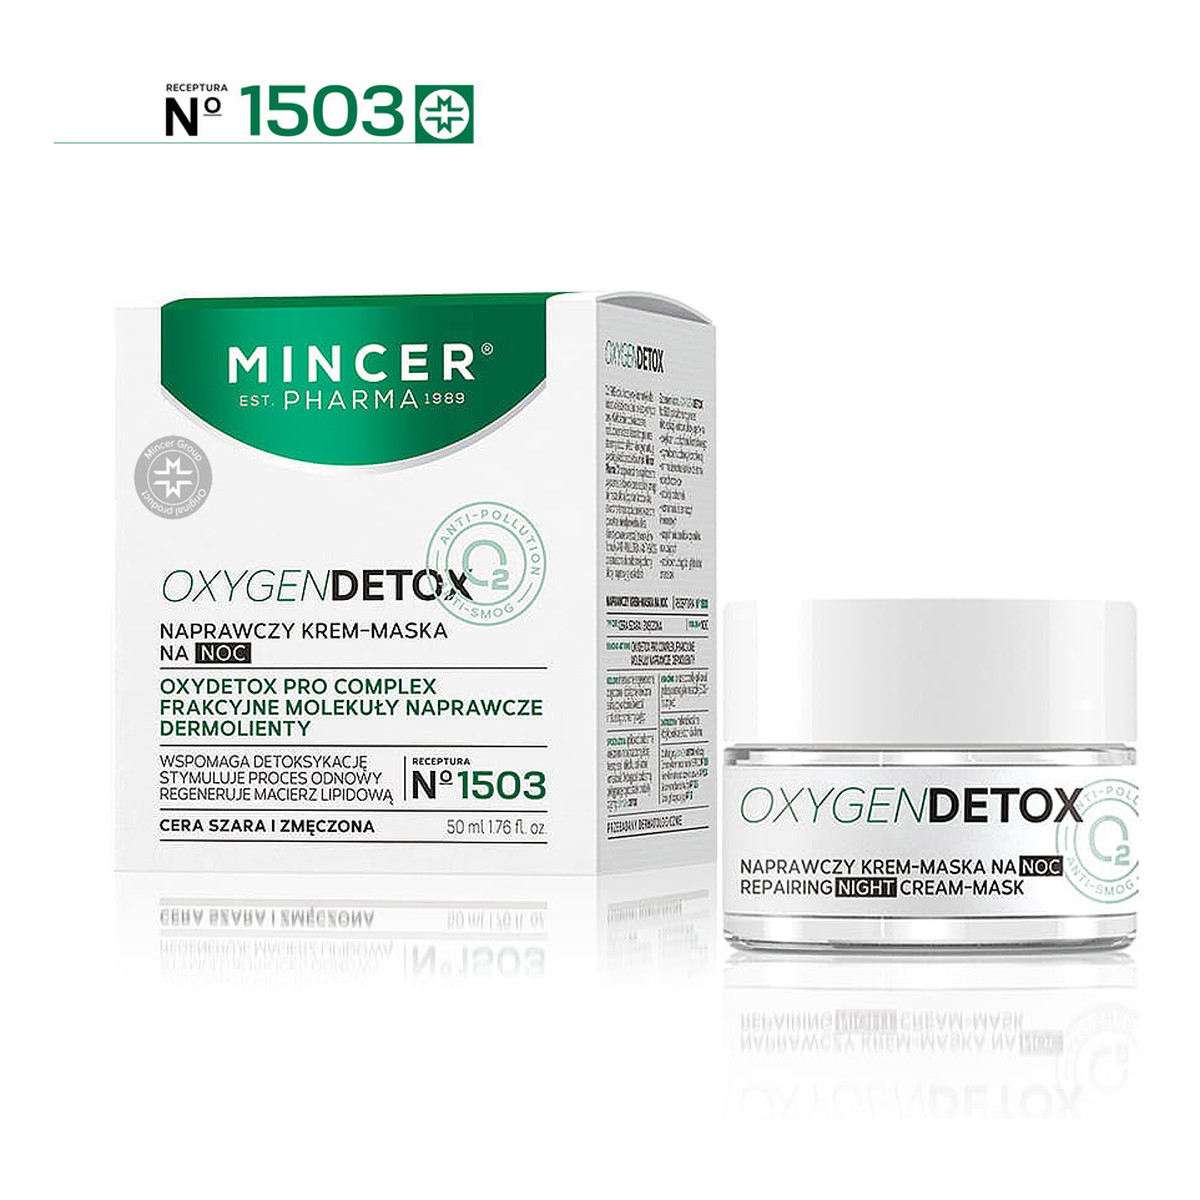 Mincer Pharma Oxygen Detox Naprawczy krem-maska na noc 1503 50ml